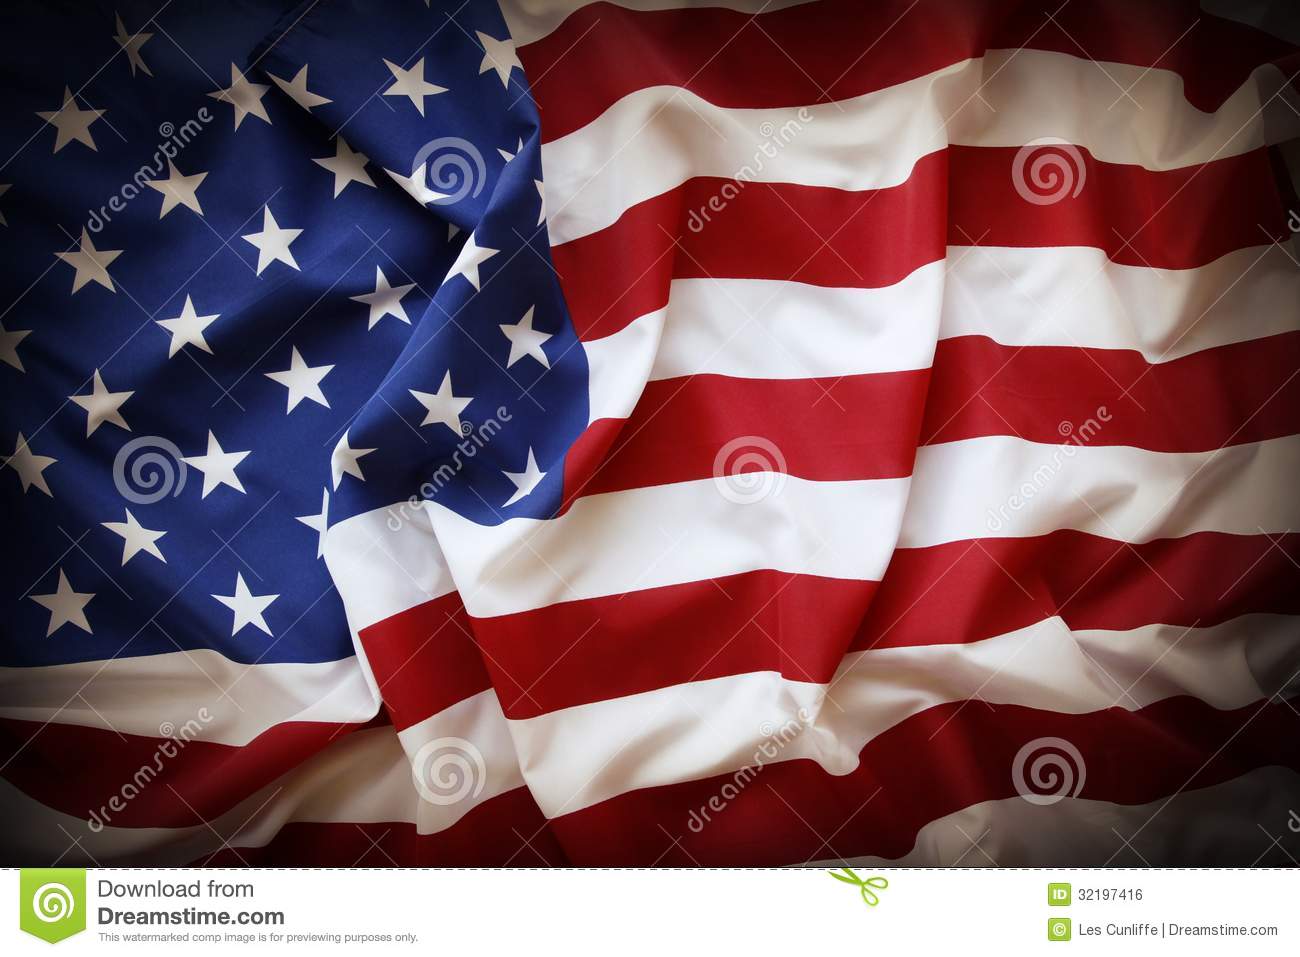 American Flag Royalty Free Stock Image   Image  32197416